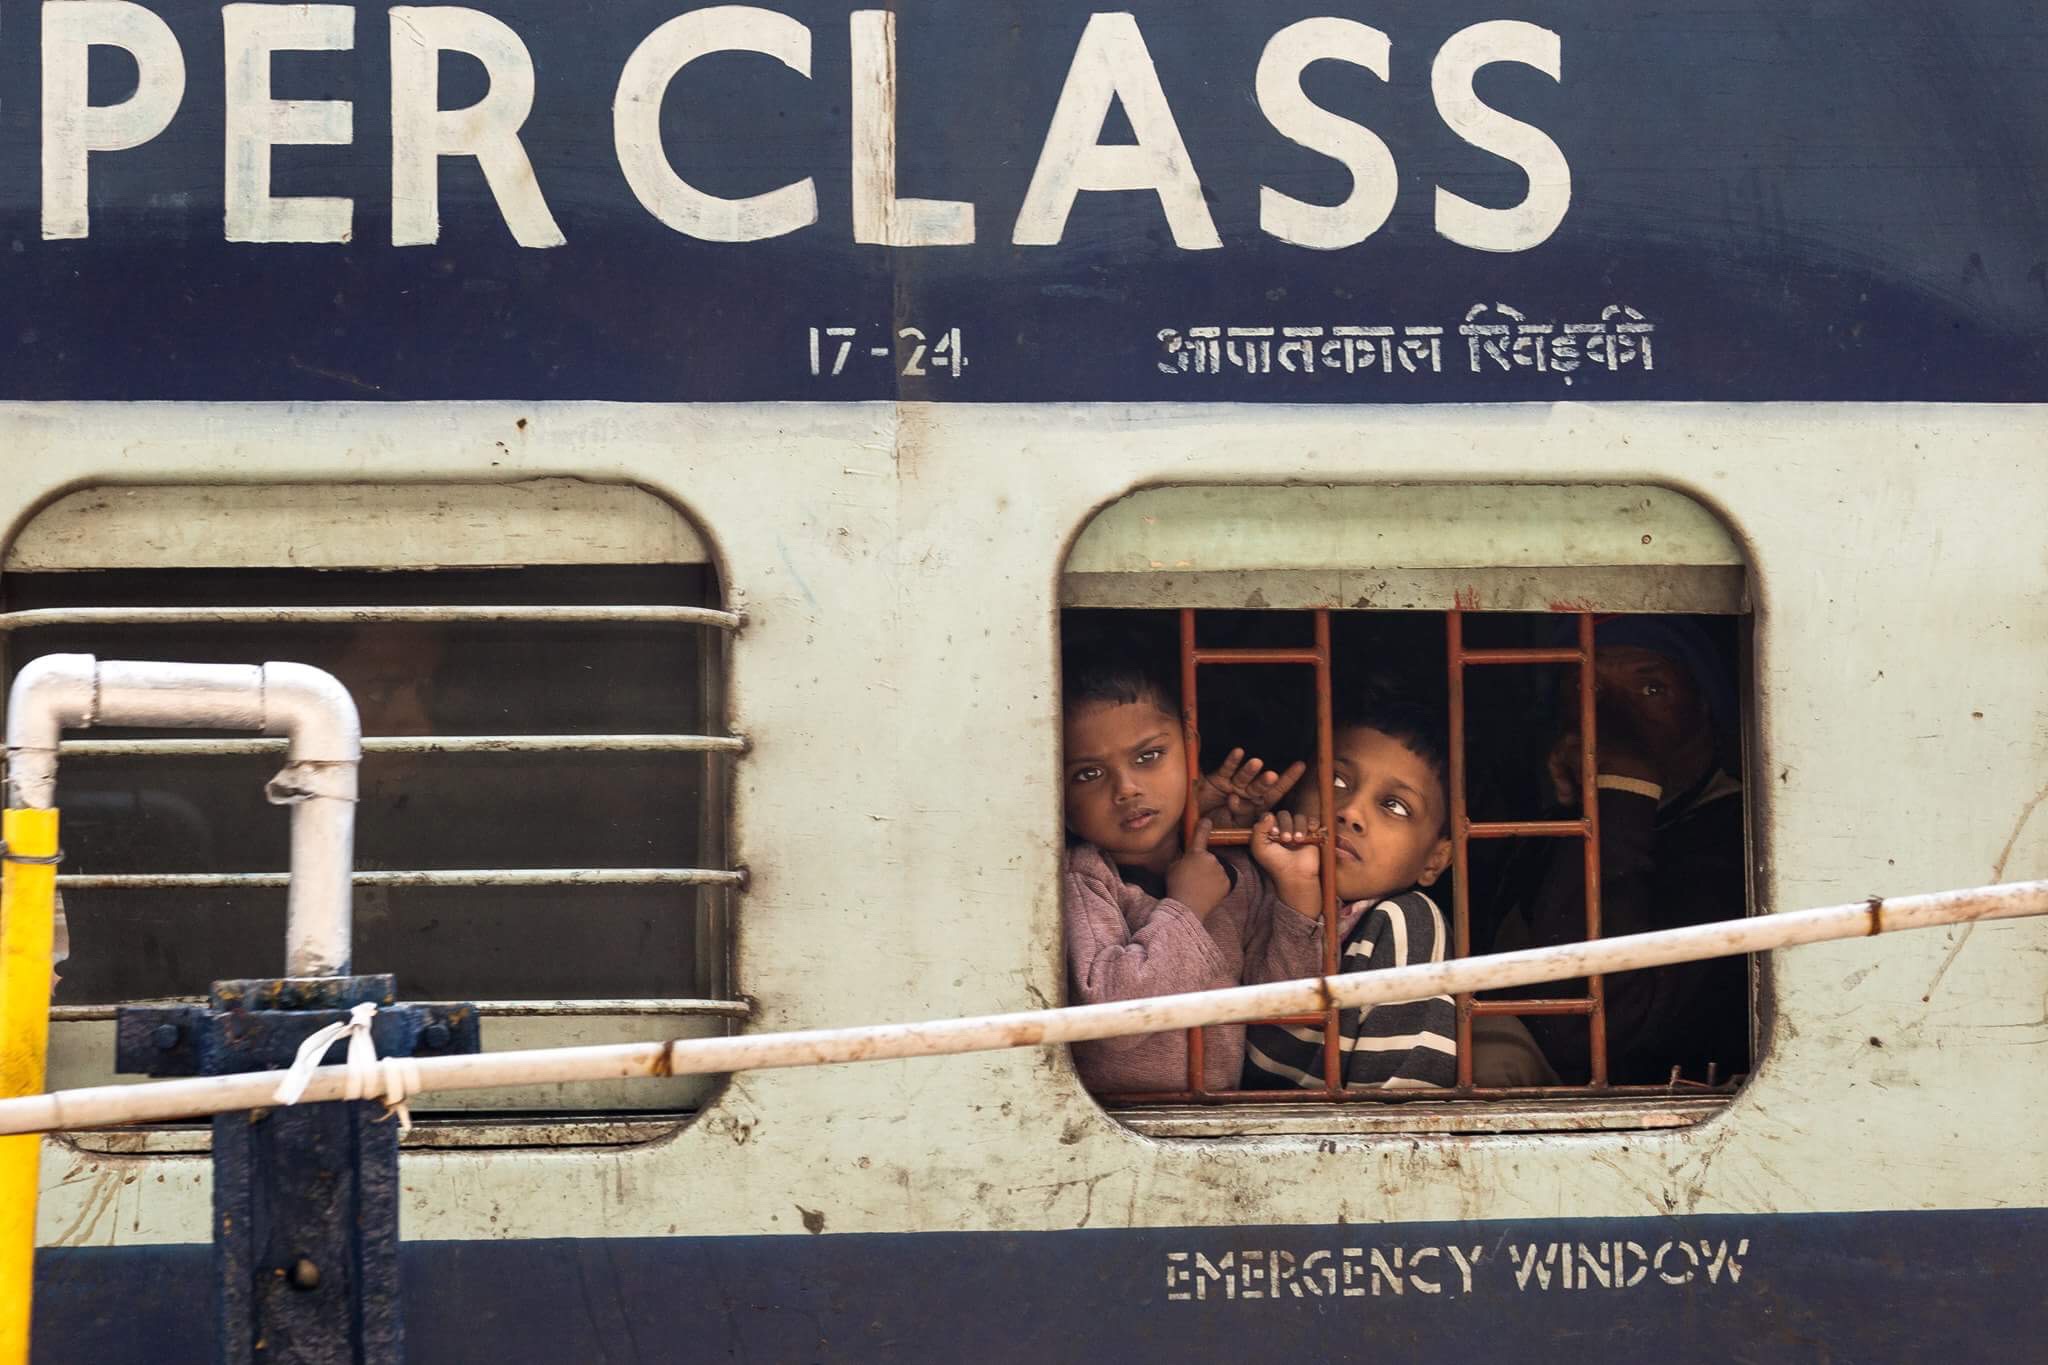 "Sleeper class", Darjeeling, Inde 2017